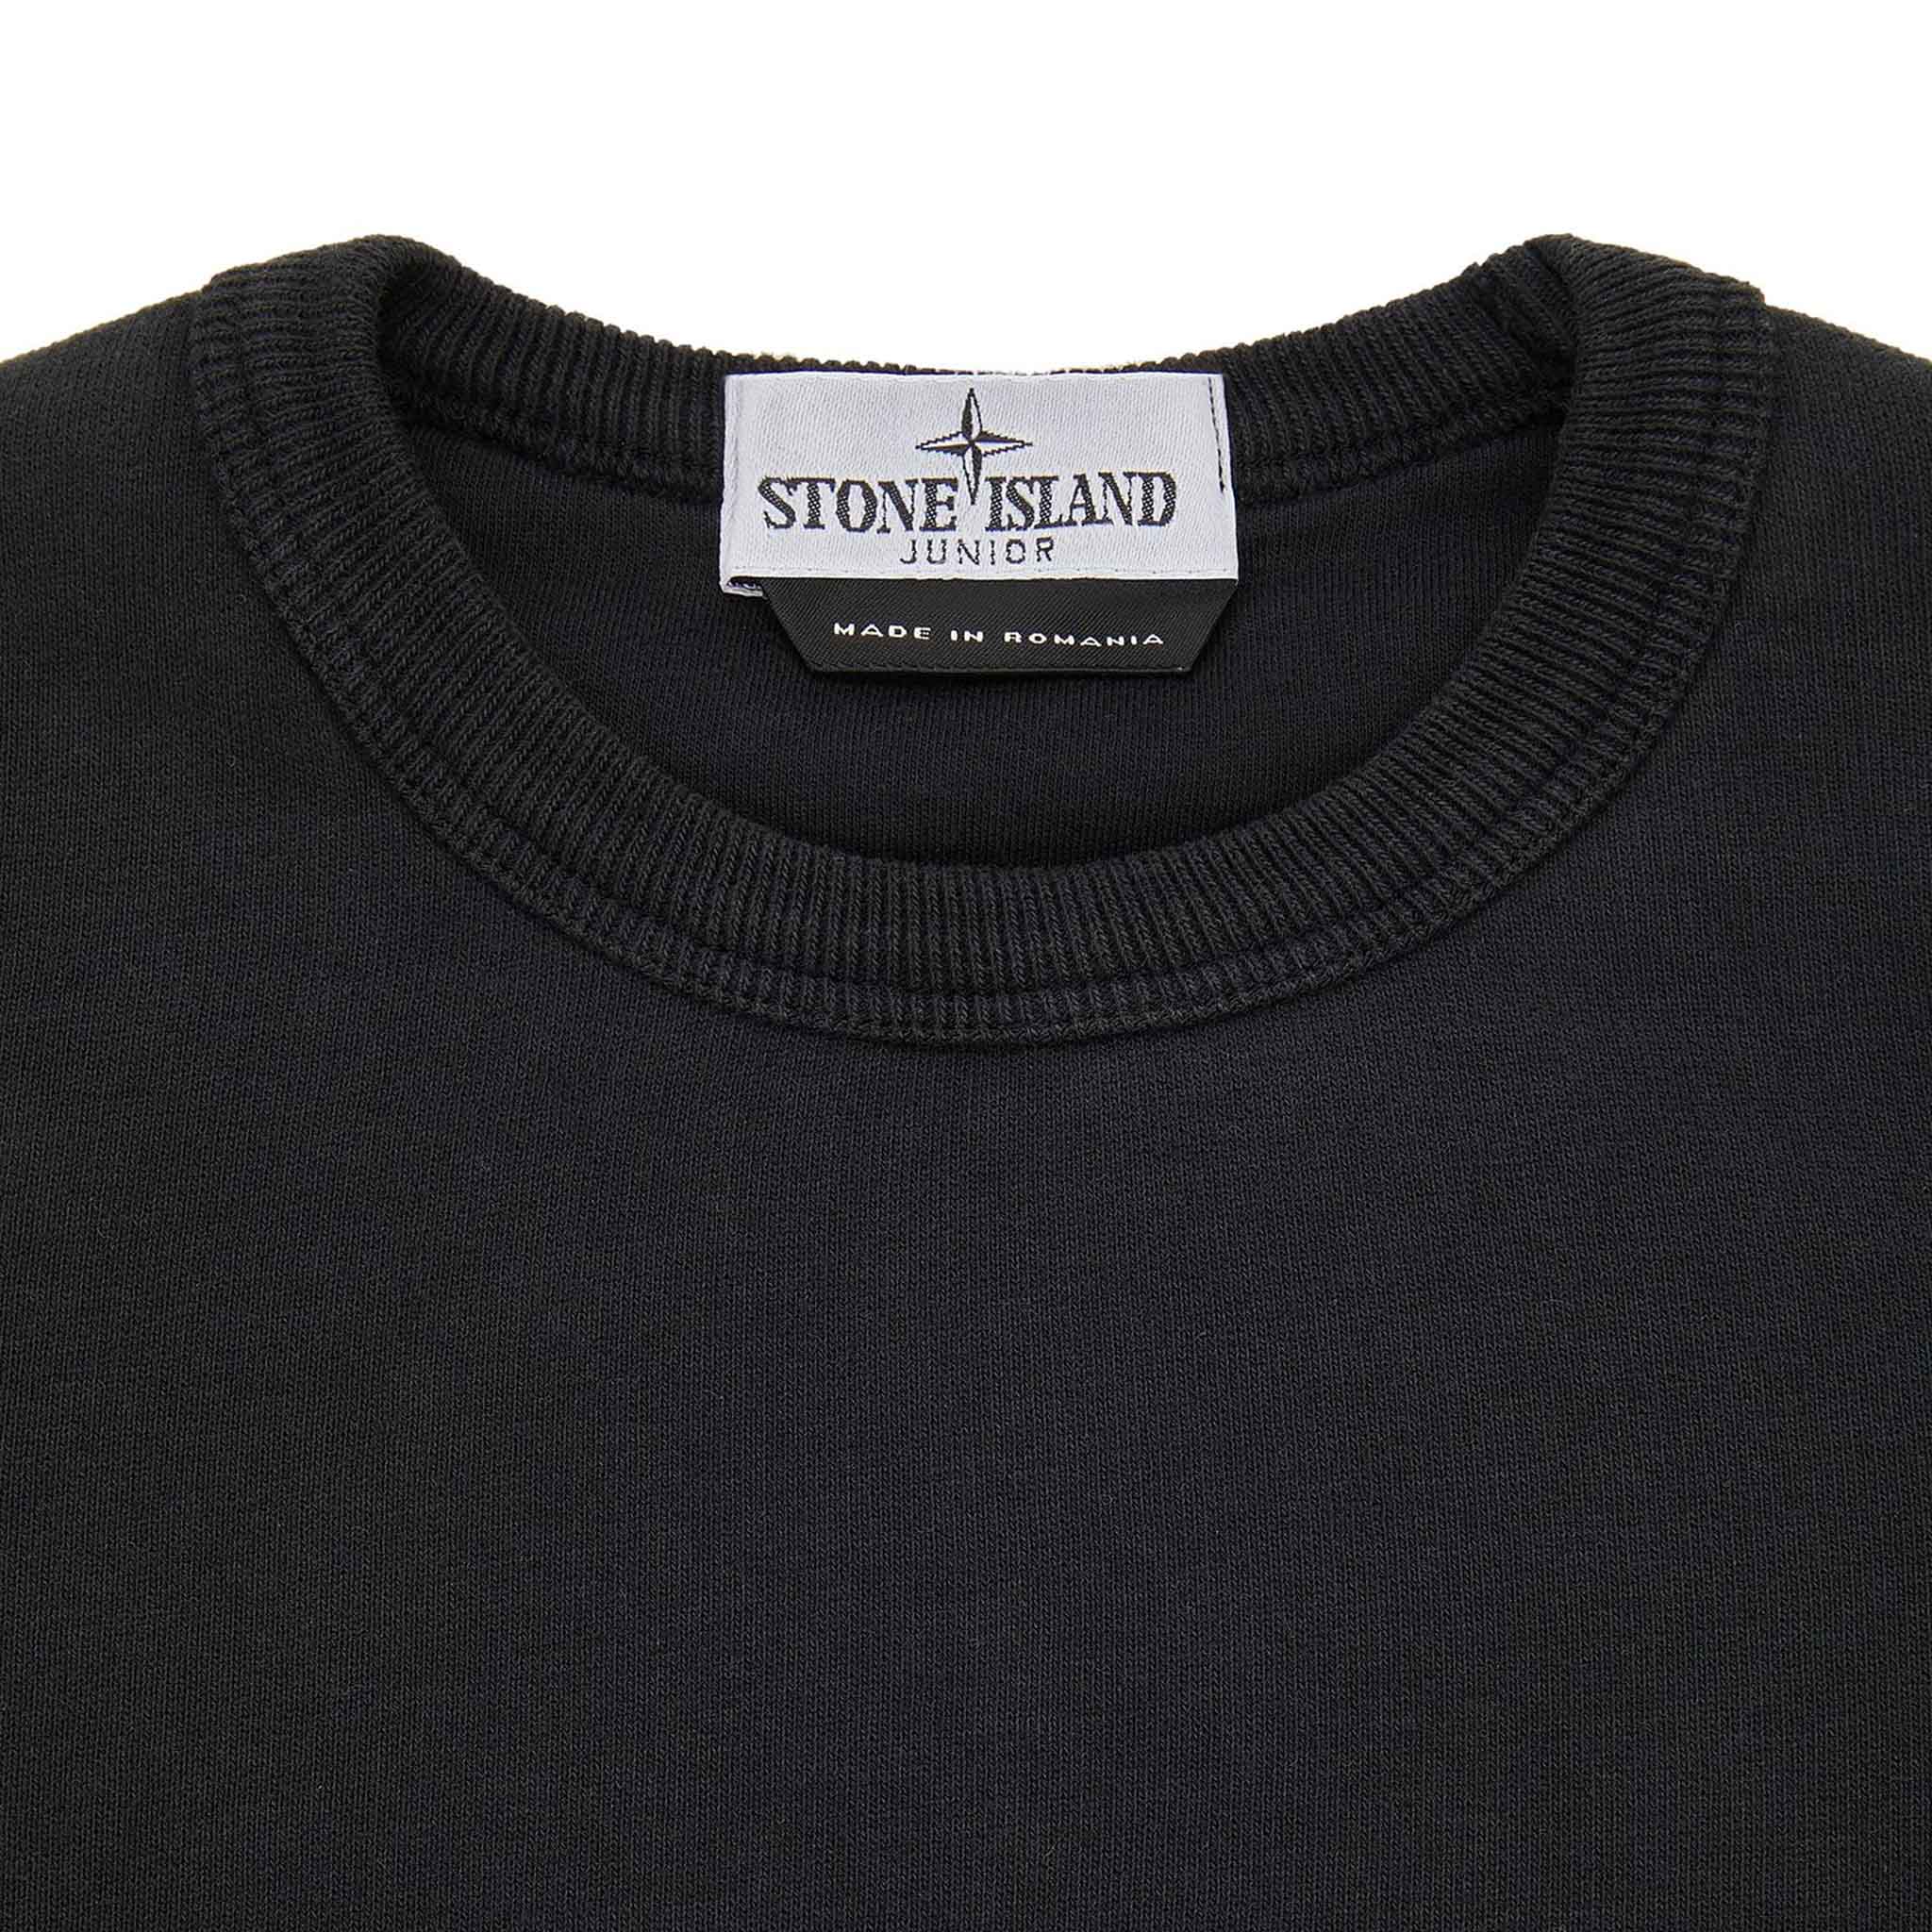 Stone Island Junior Crewneck Sweatshirt in Black